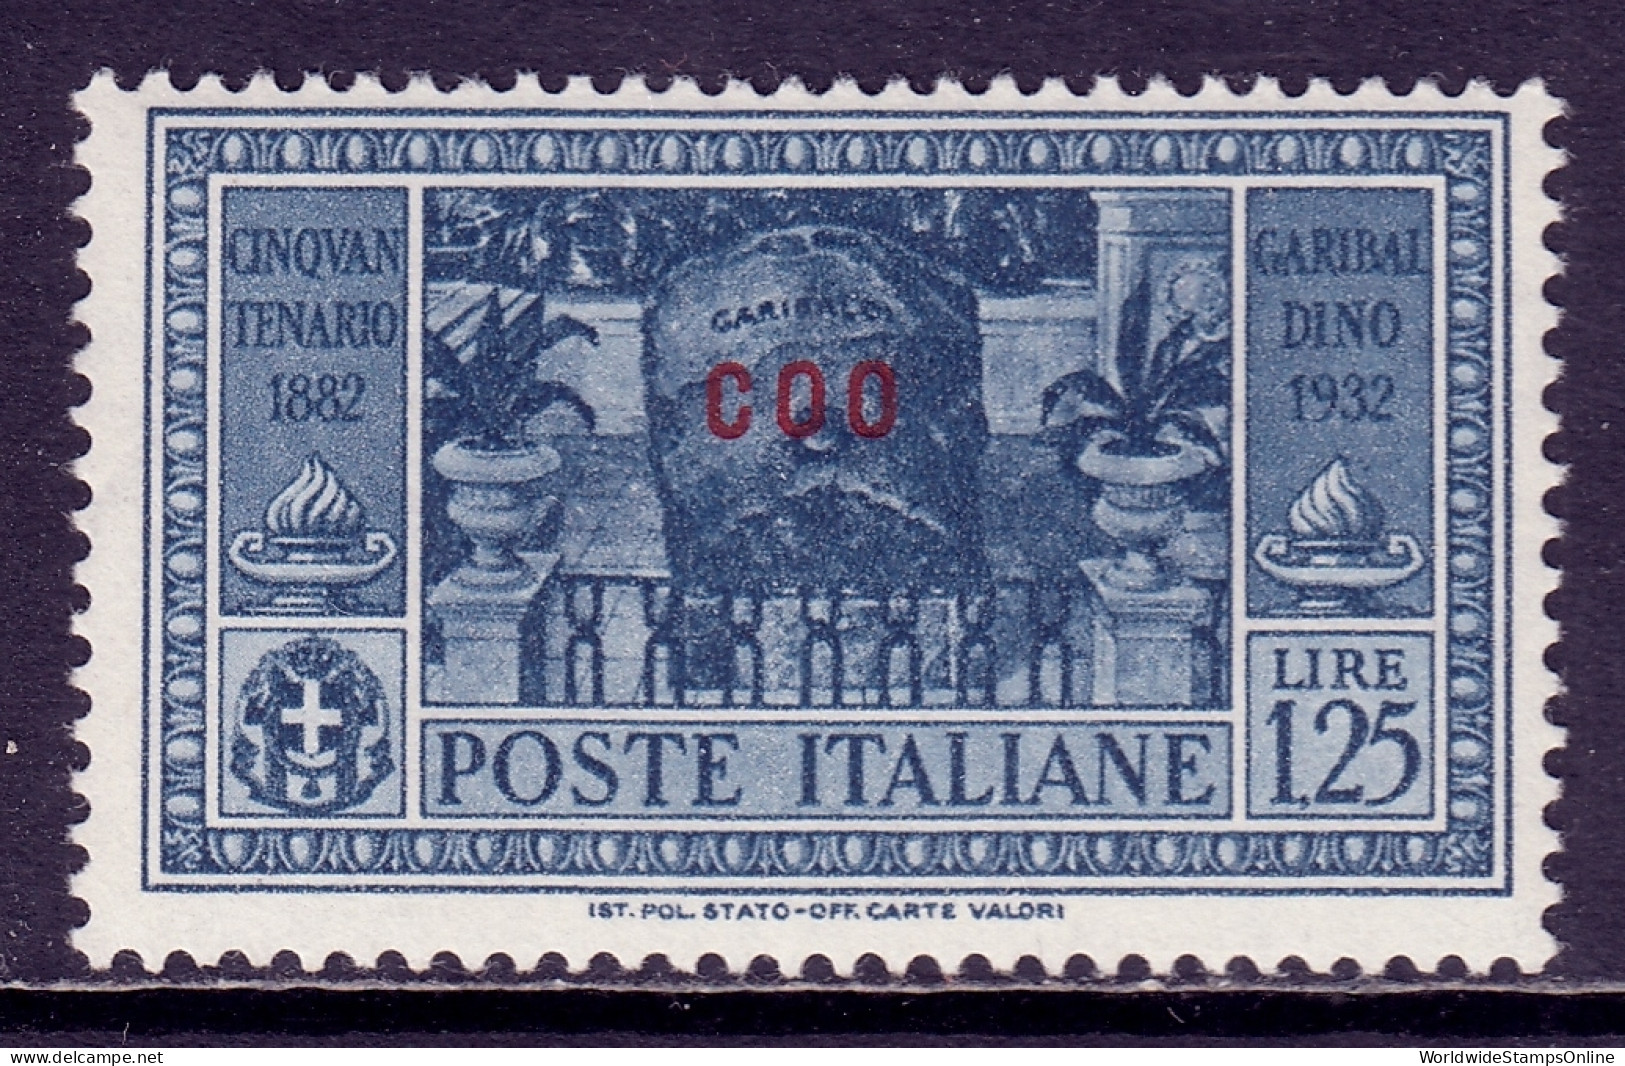 Italy (Coo) - Scott #23 - MH - SCV $18 - Aegean (Coo)